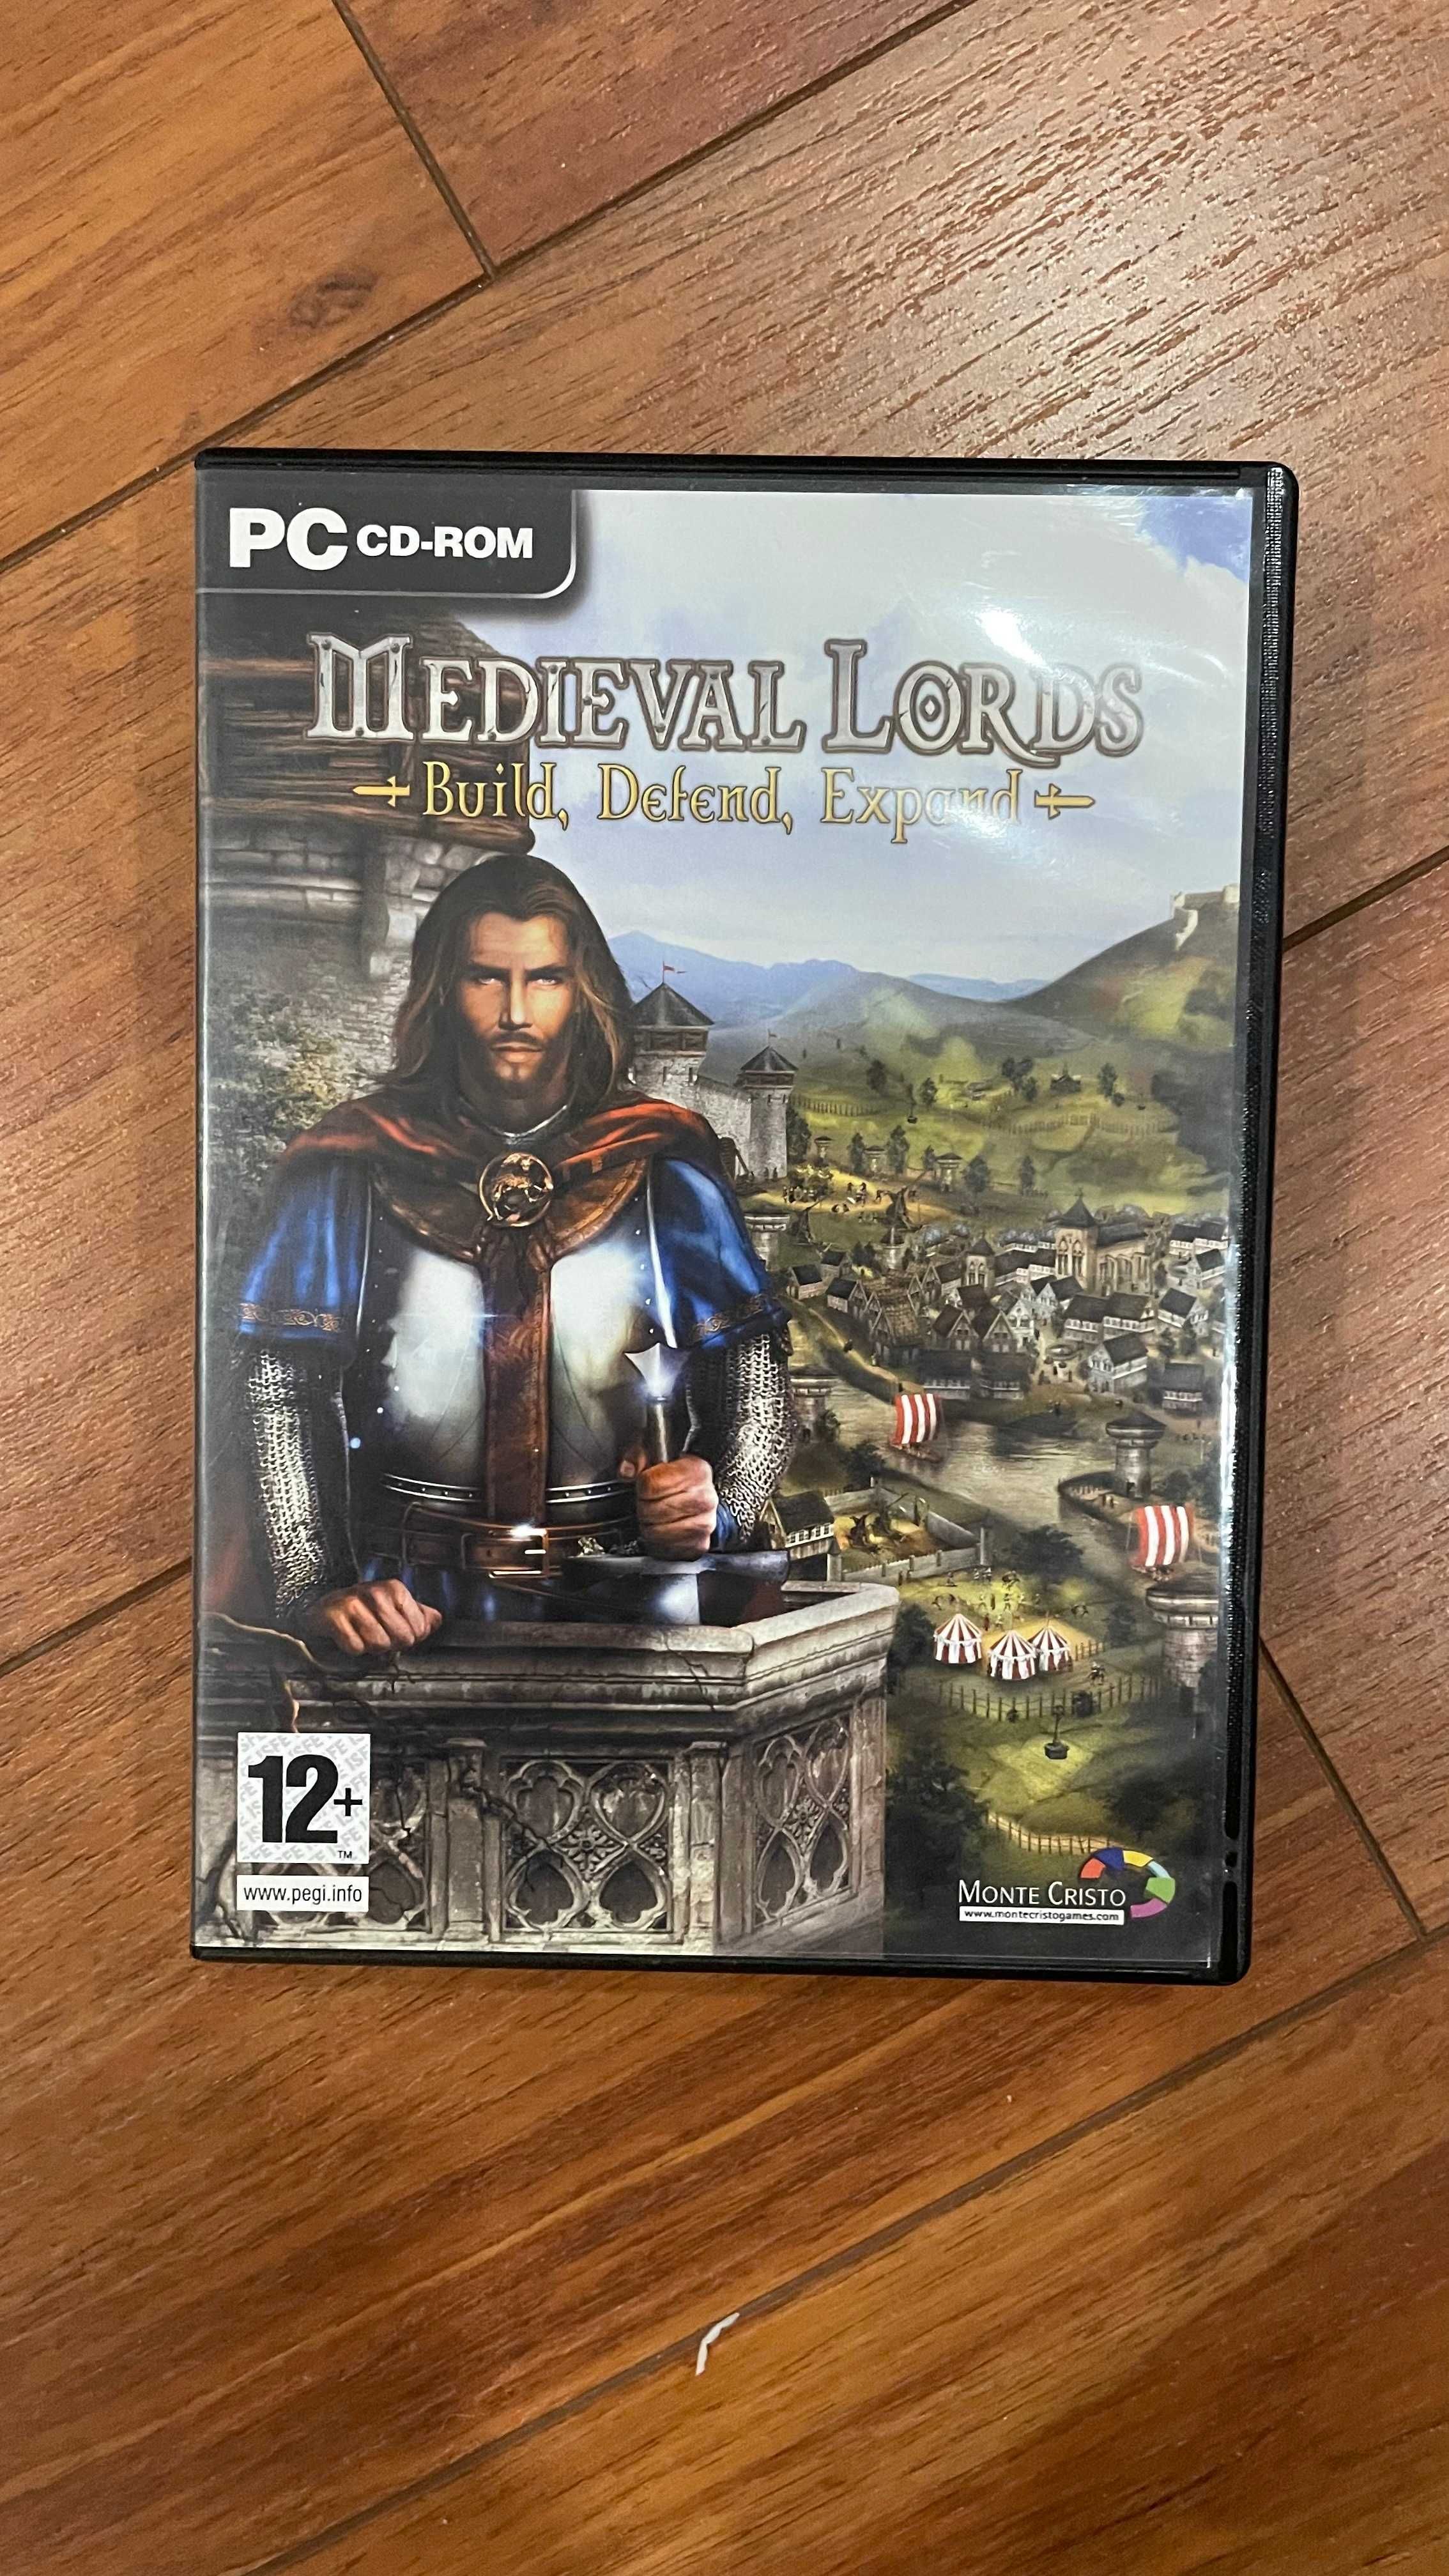 Jogos de PC "Medieval Wars" e "Race On"